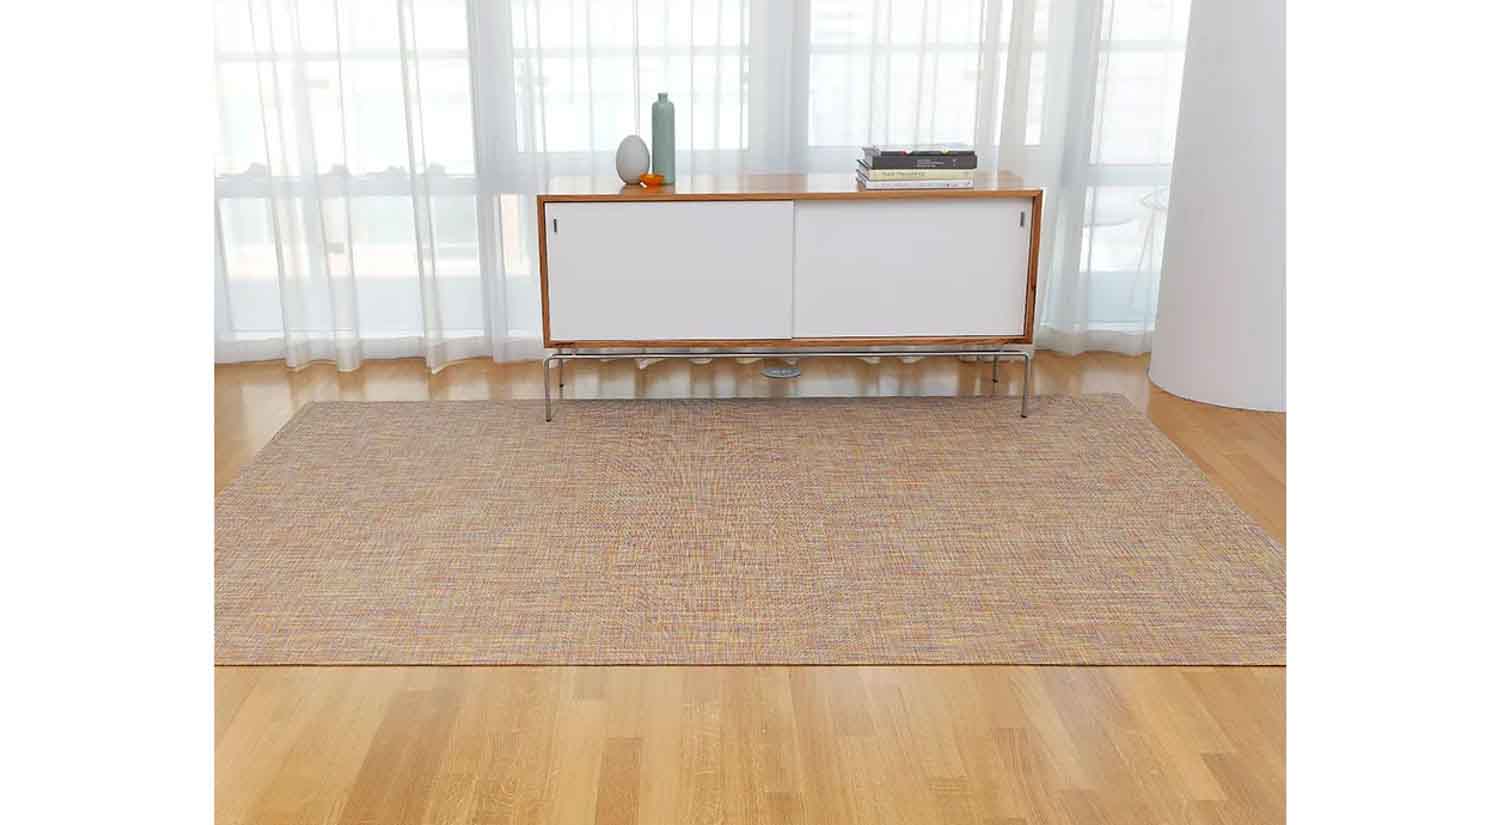 Chilewich Basketweave Floor Mat